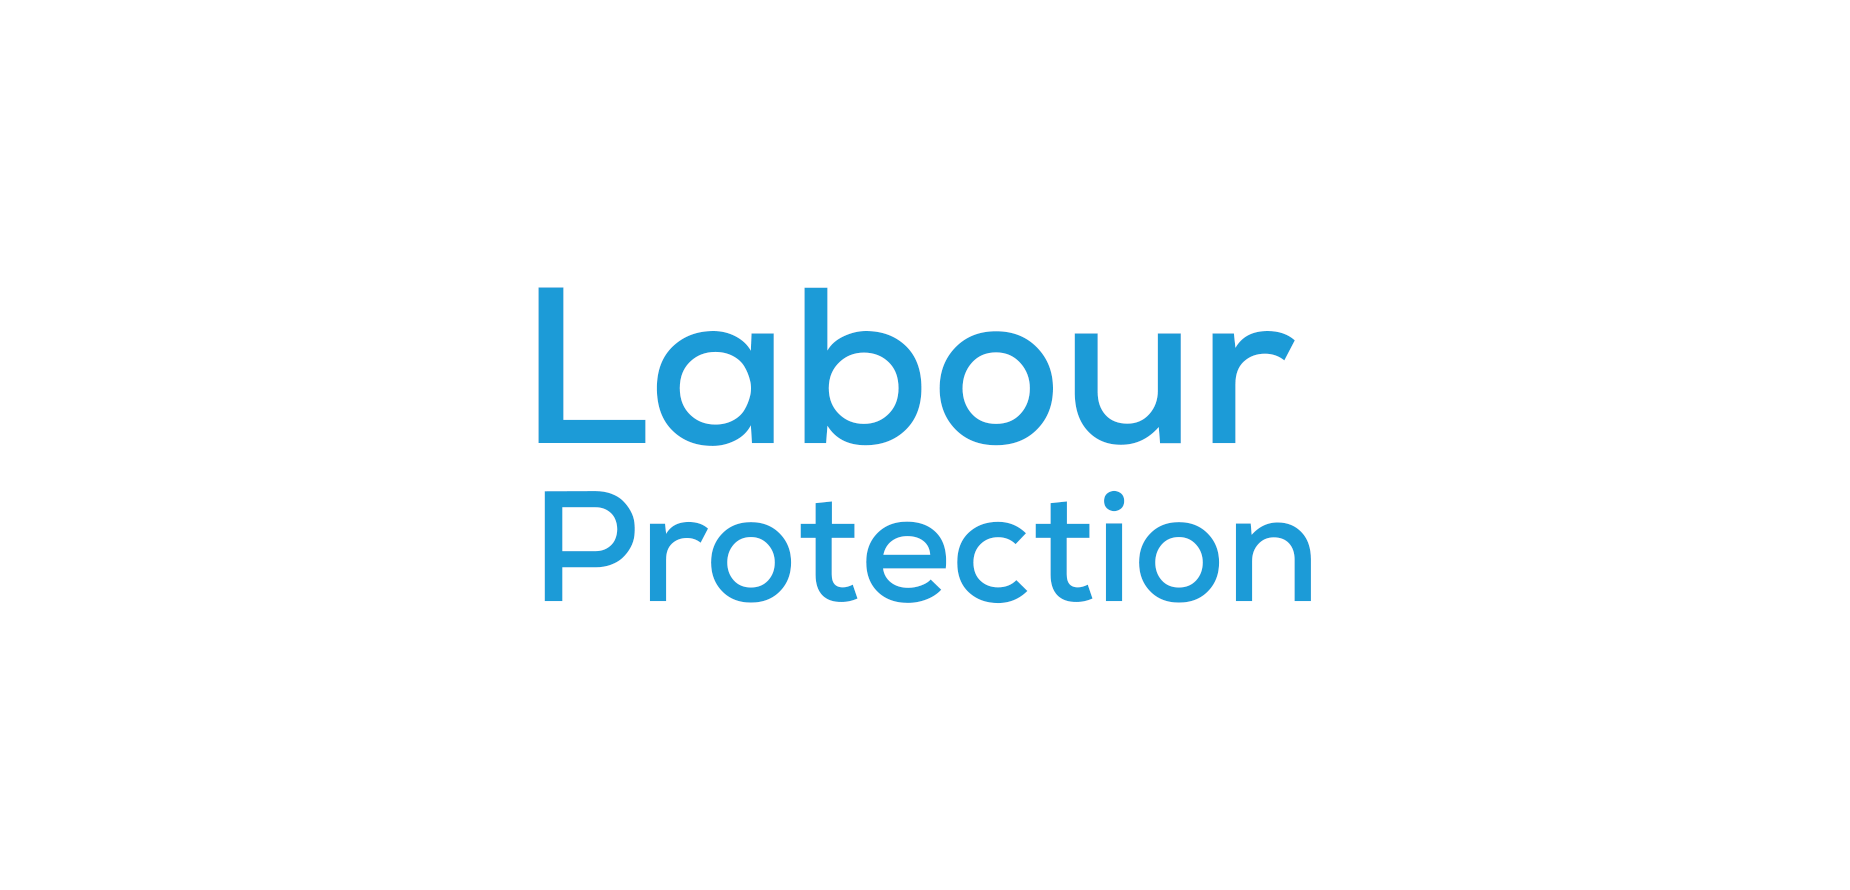 Labour Protection